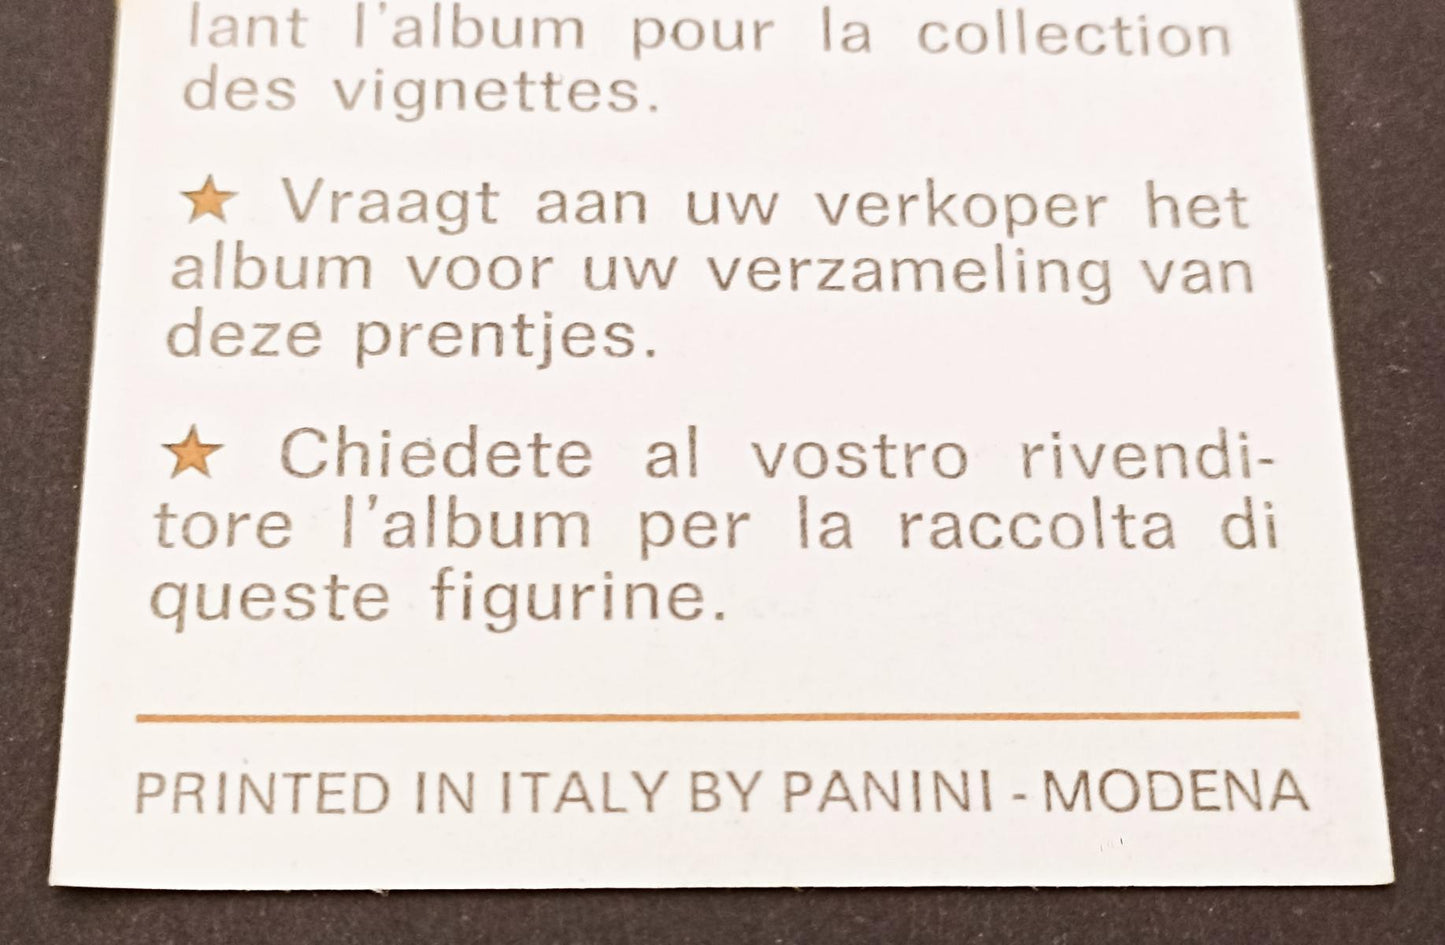 ATHLETICS CARD - PANINI - OLYMPIA 1972 - WILMA RUDOLPH - #197 - MINT